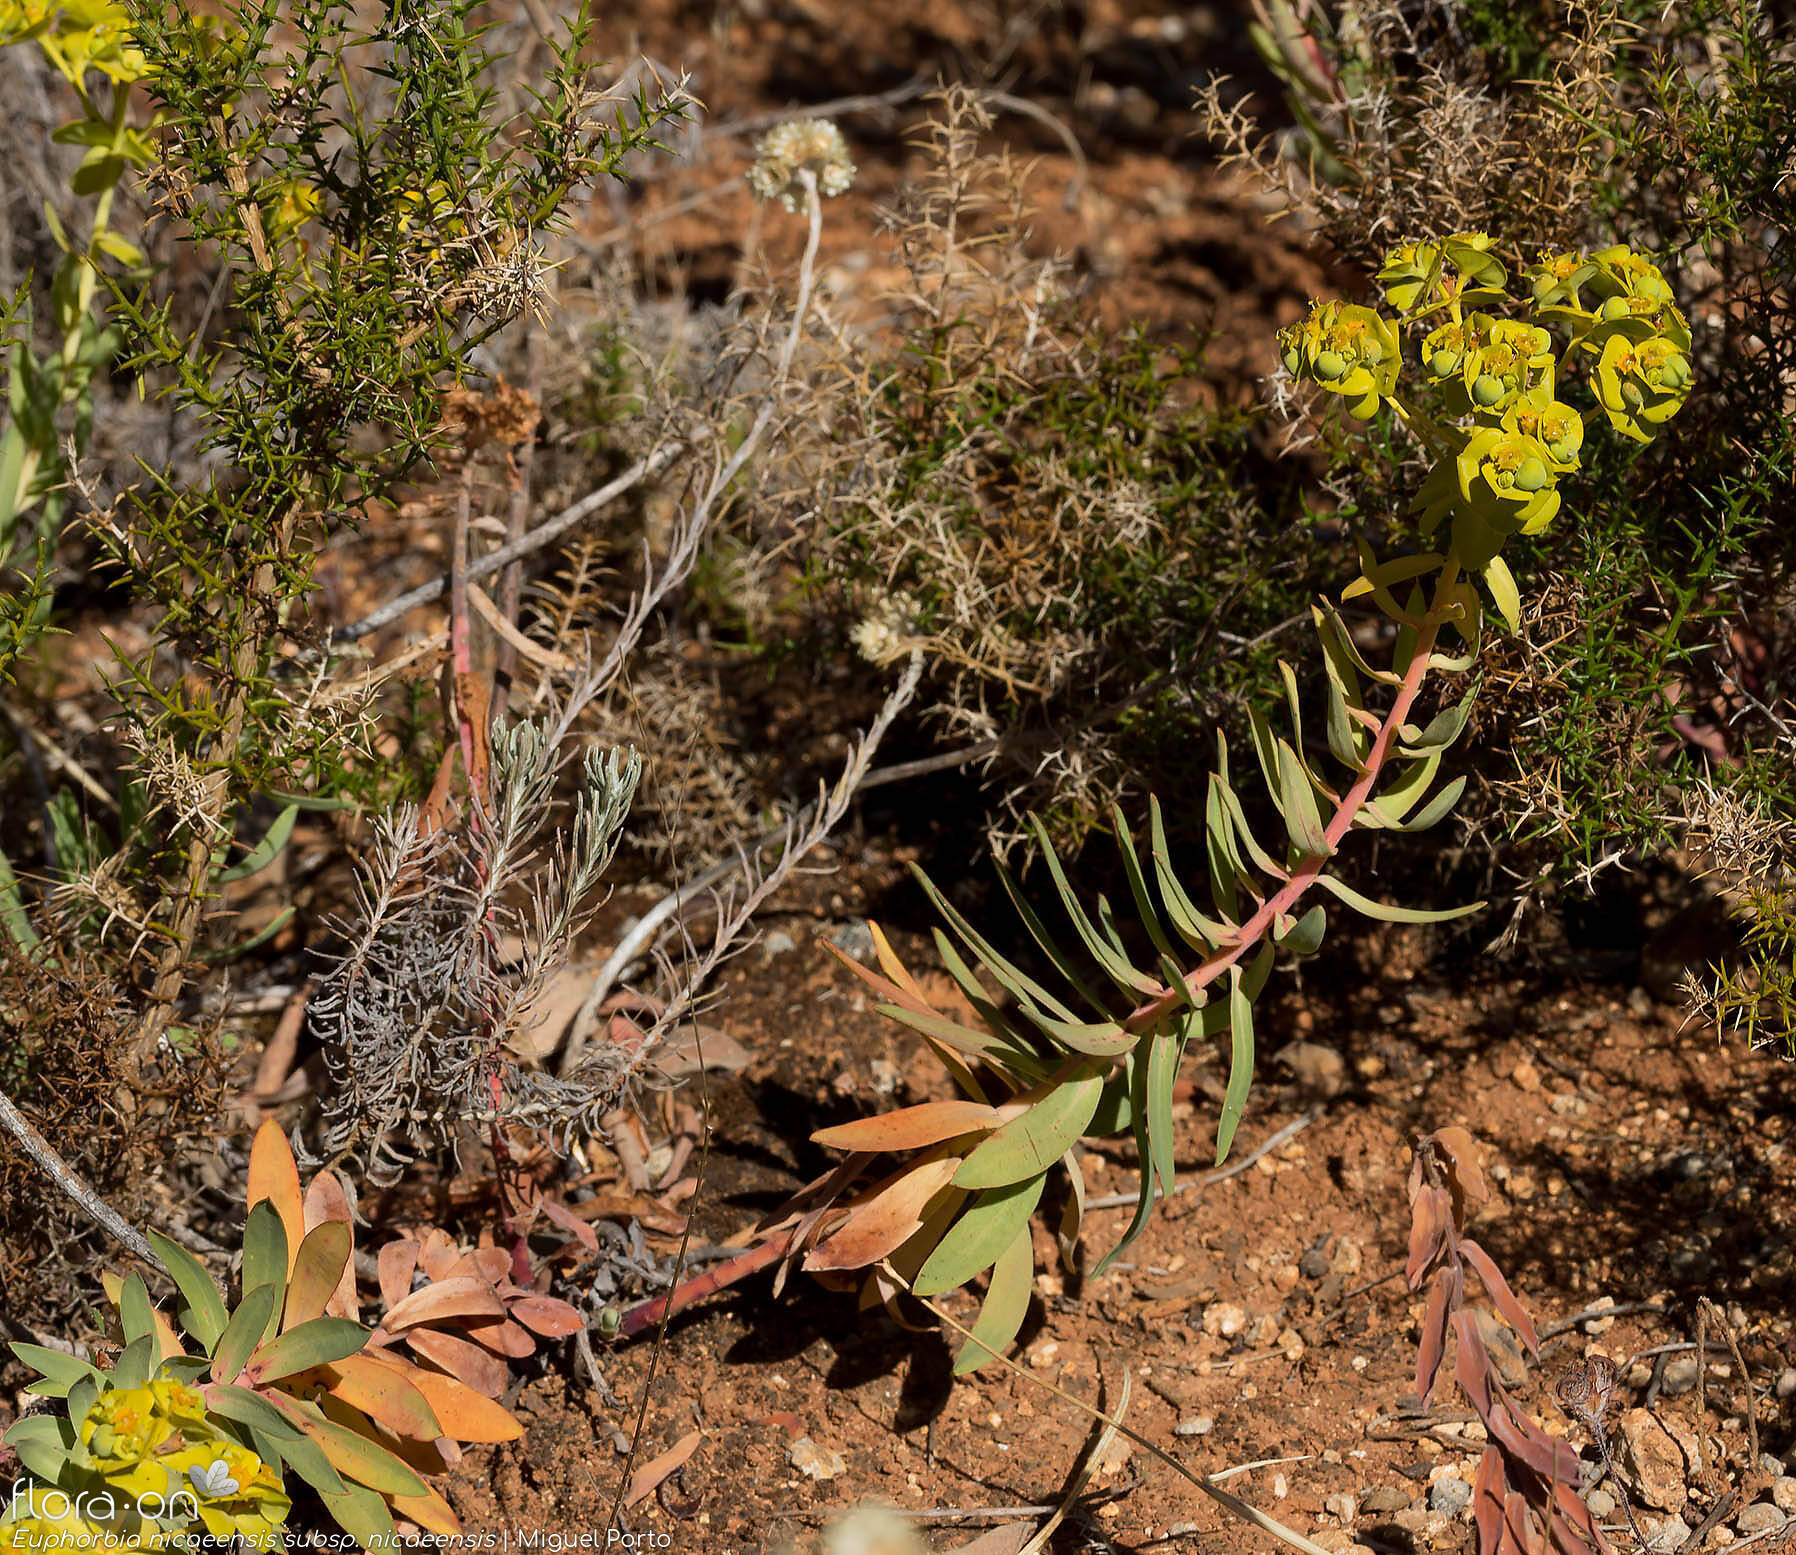 Euphorbia nicaeensis nicaeensis - Hábito | Miguel Porto; CC BY-NC 4.0